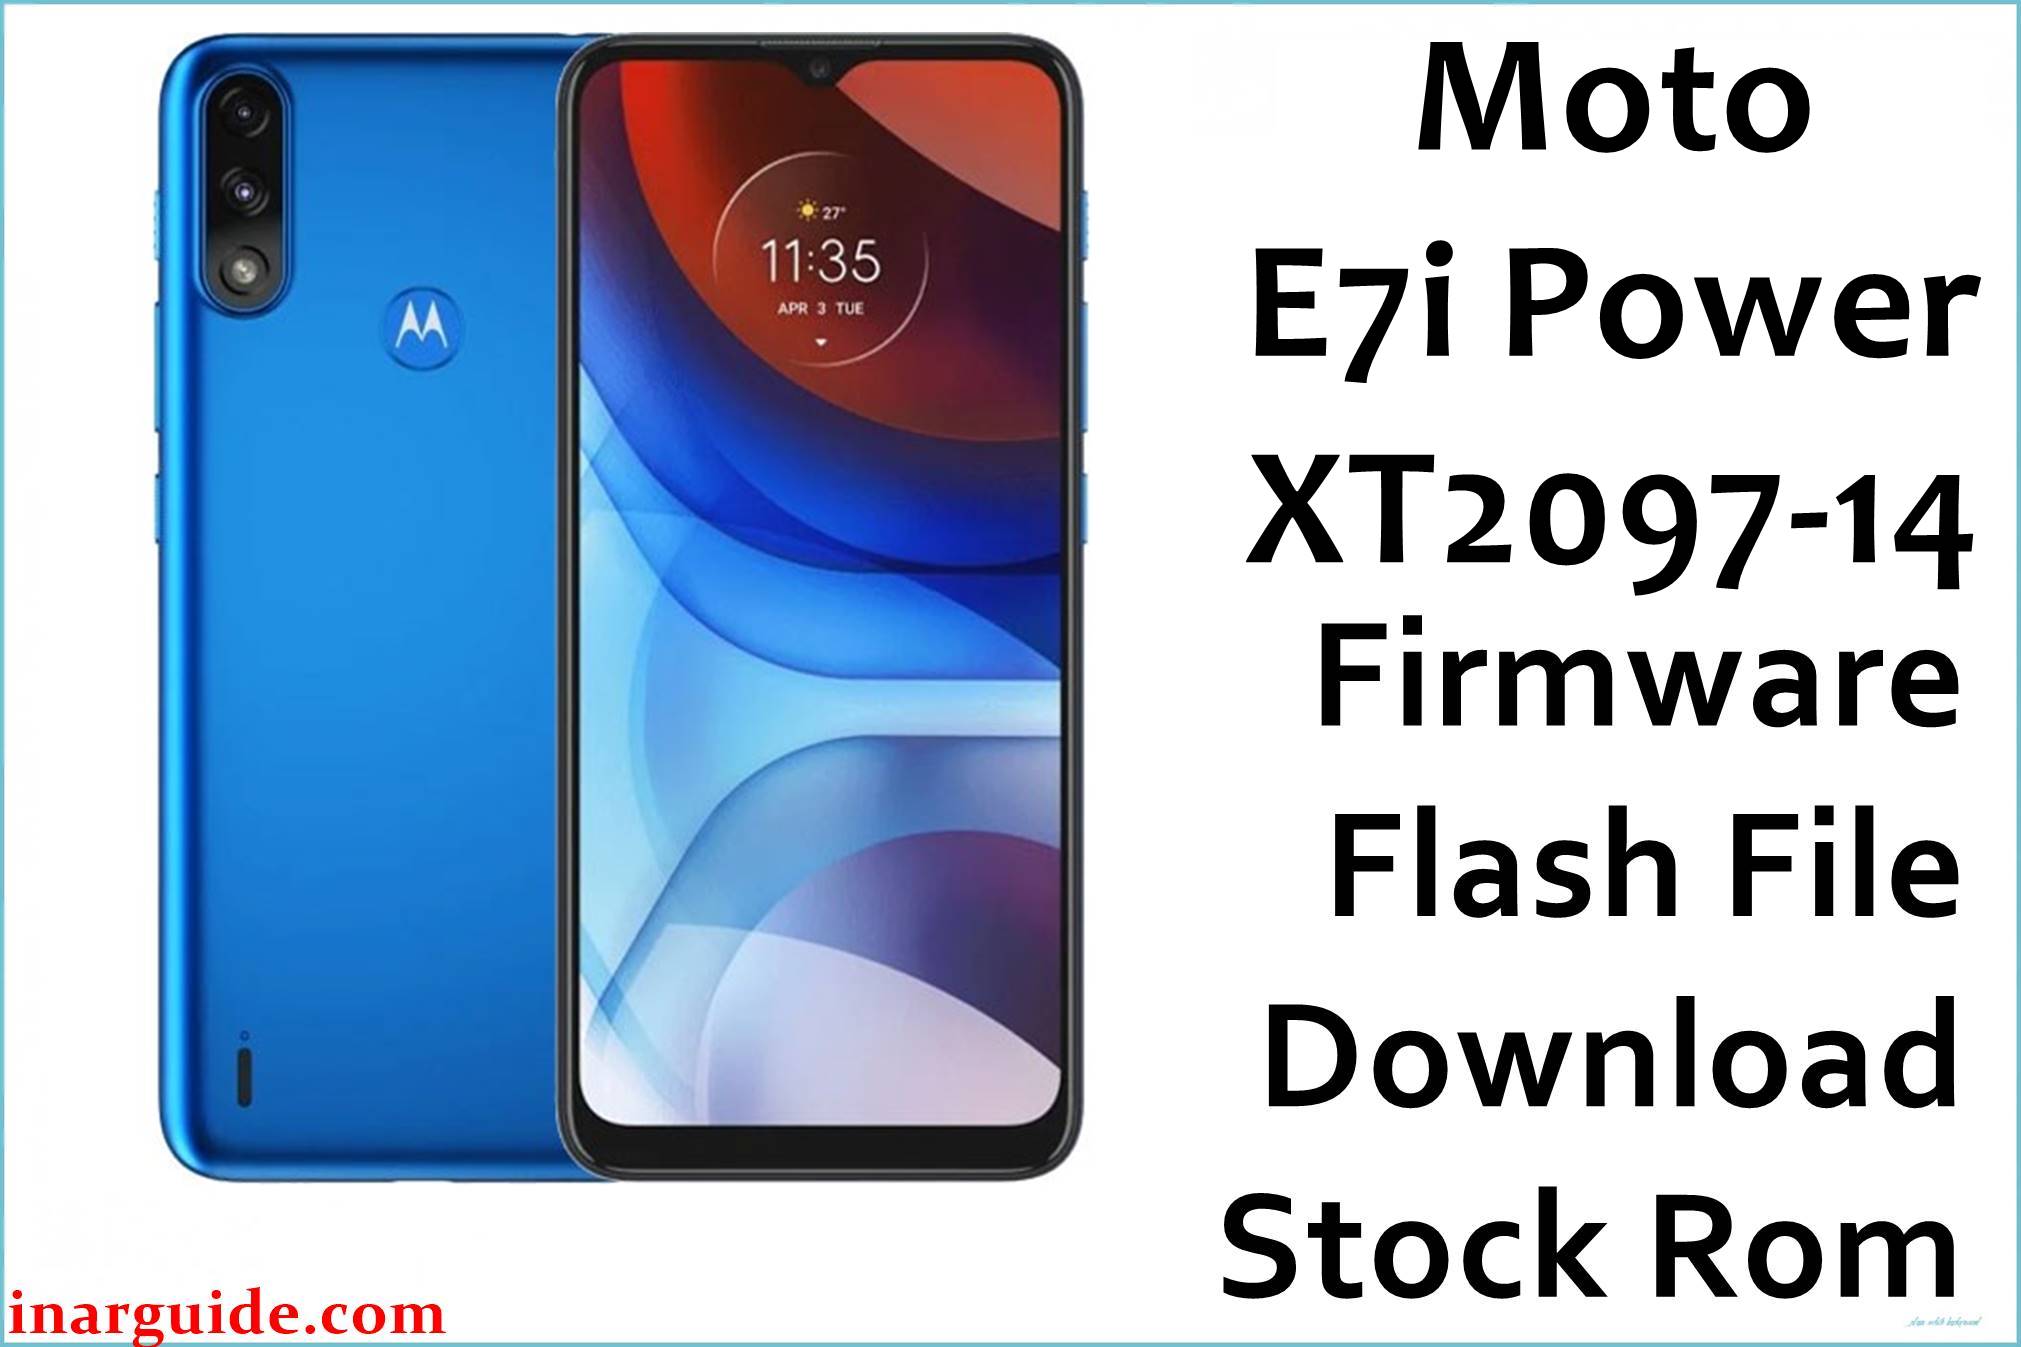 Motorola Moto E7i Power XT2097-14